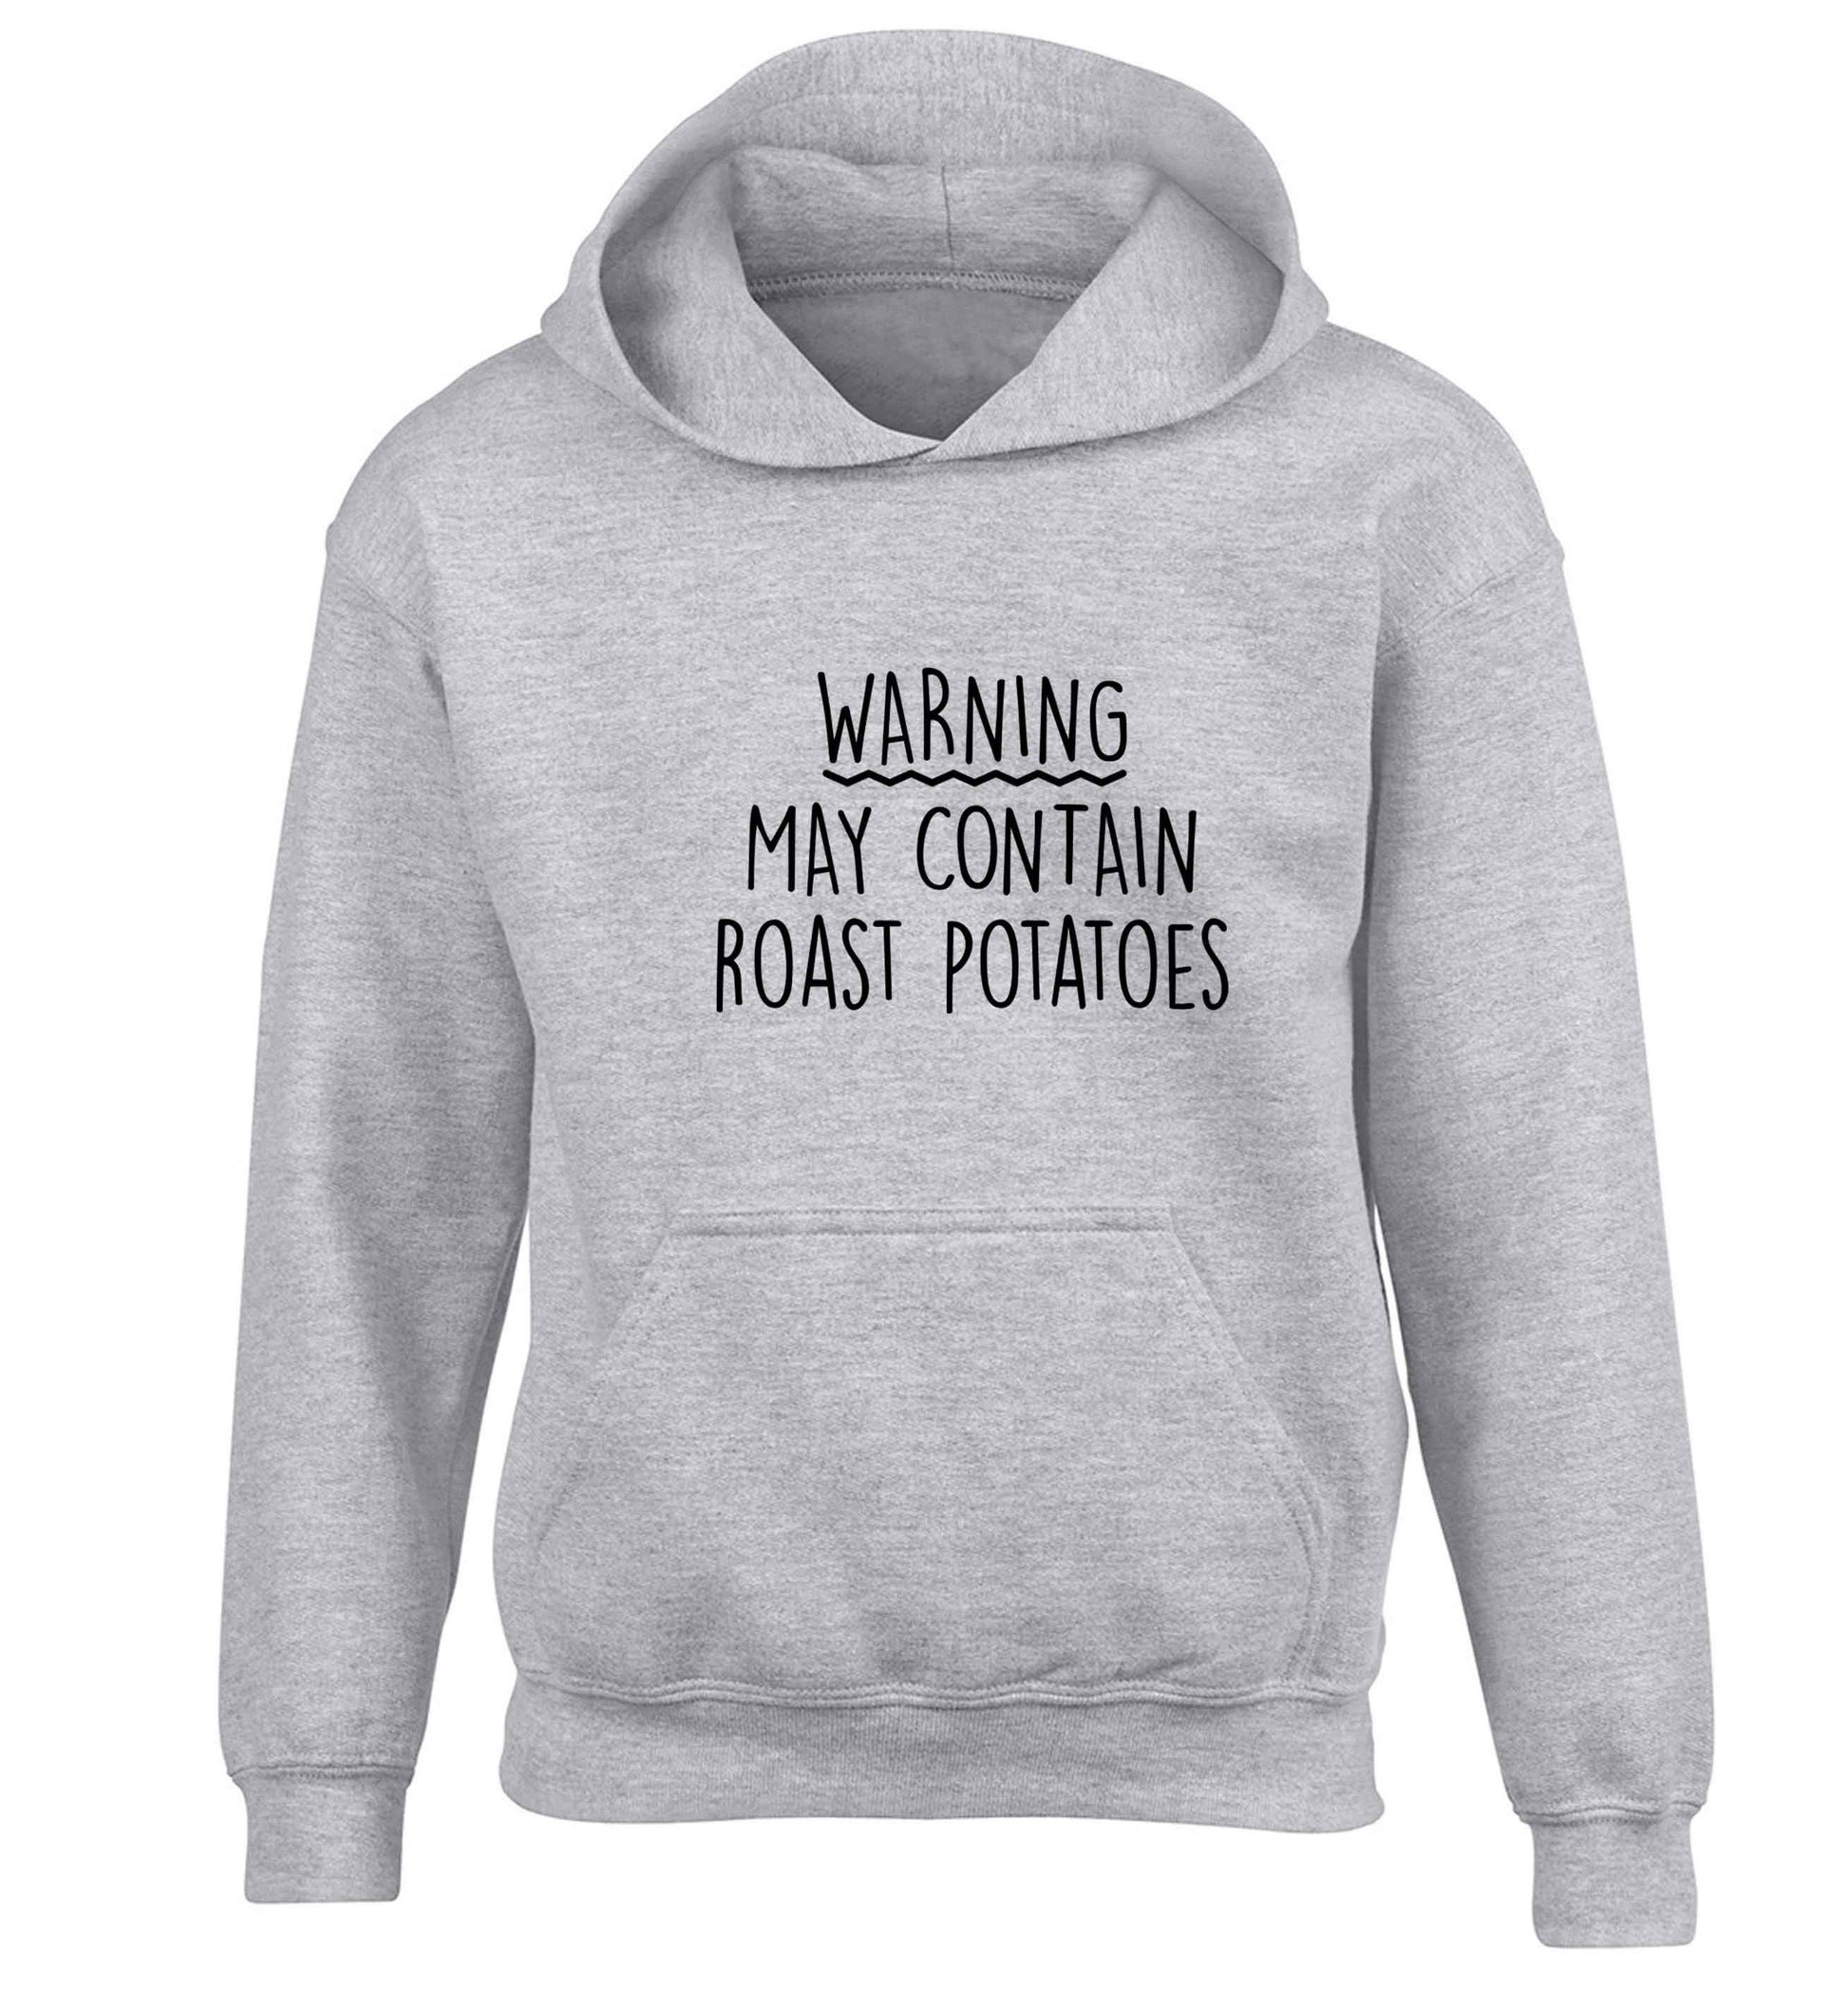 Warning may containg roast potatoes children's grey hoodie 12-13 Years